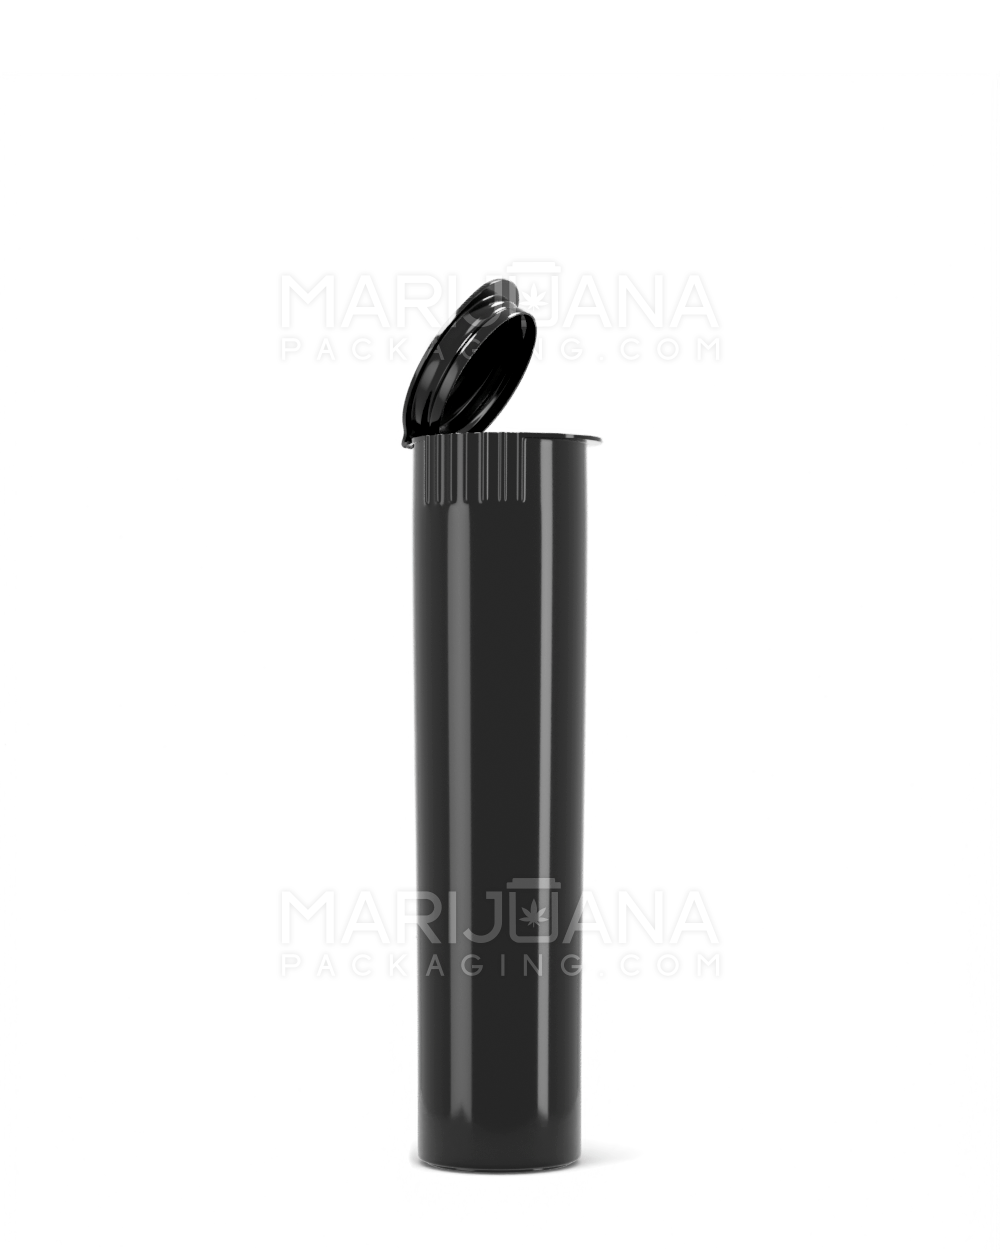 Child Resistant Pop Top Opaque Plastic Pre-Roll Tubes | 80mm - Black | Sample - 1